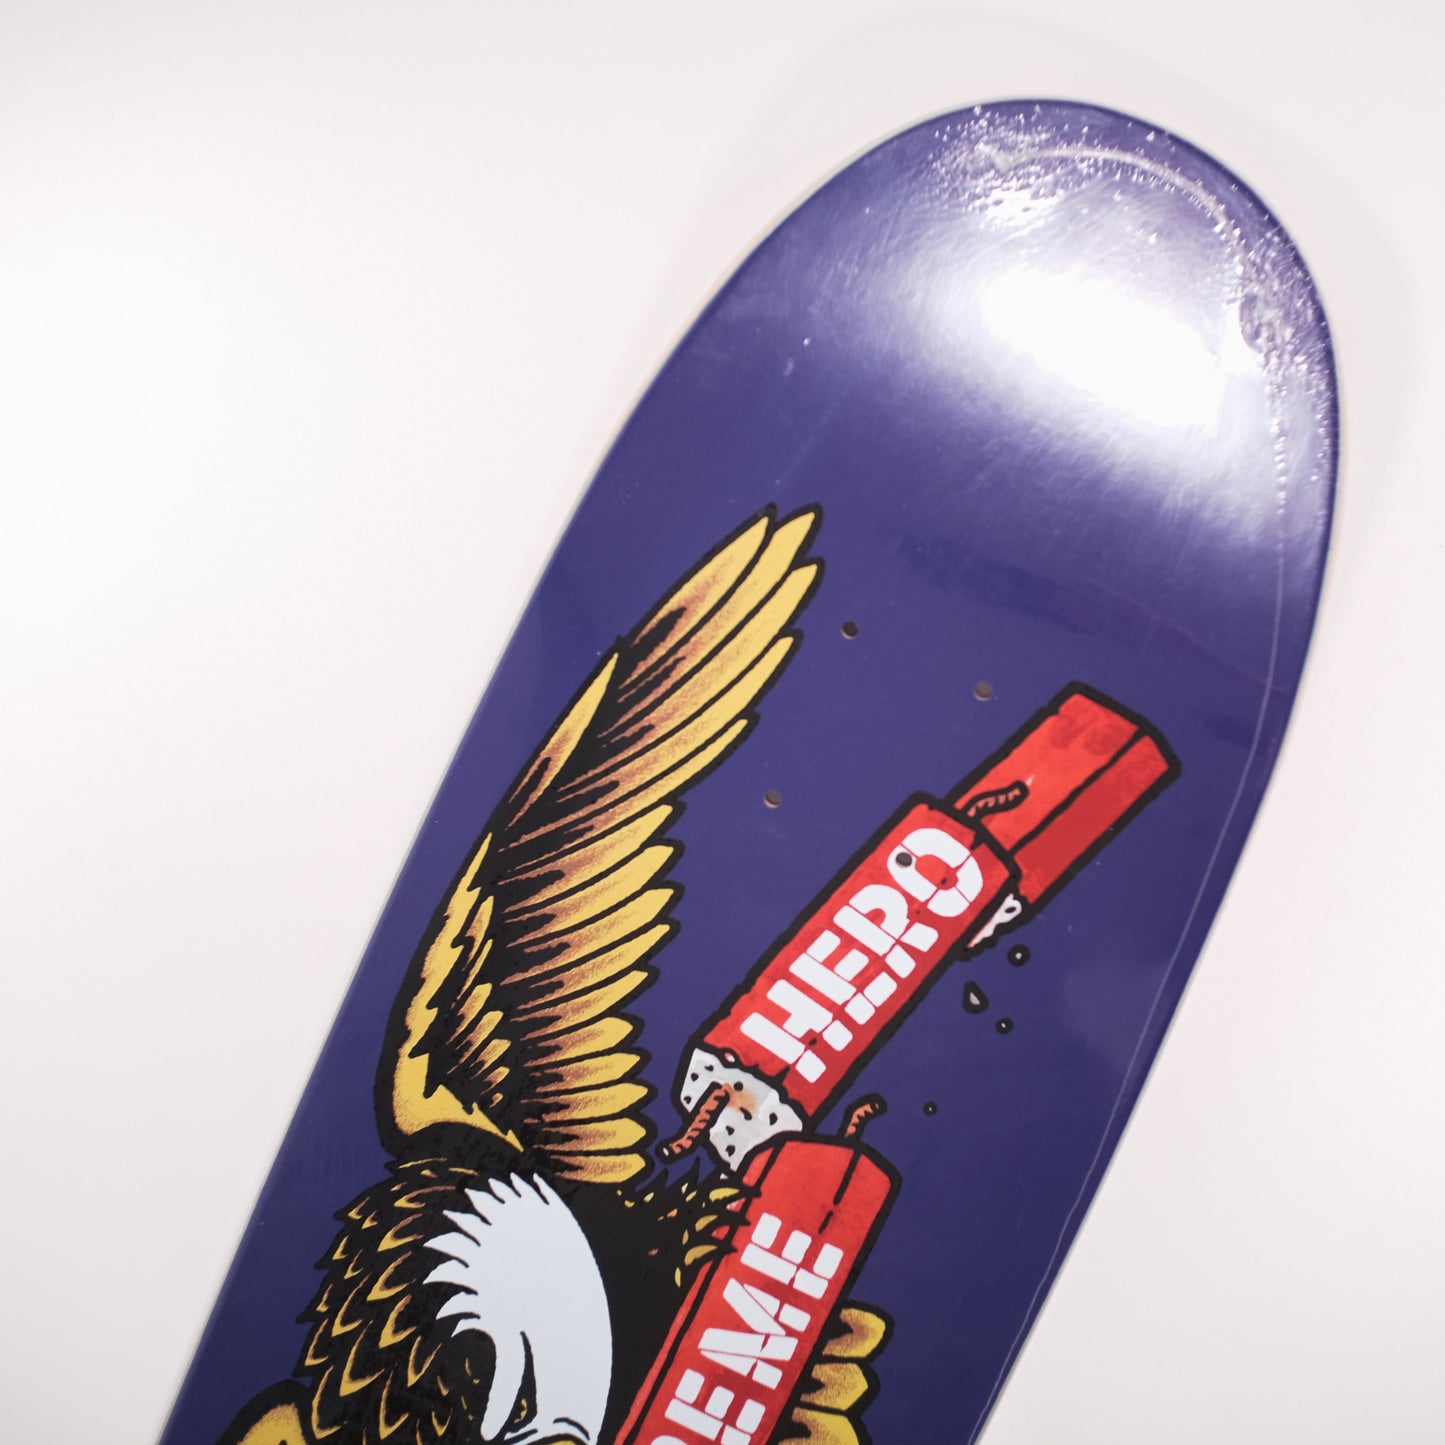 Supreme X Antihero Curbs Skateboard Deck